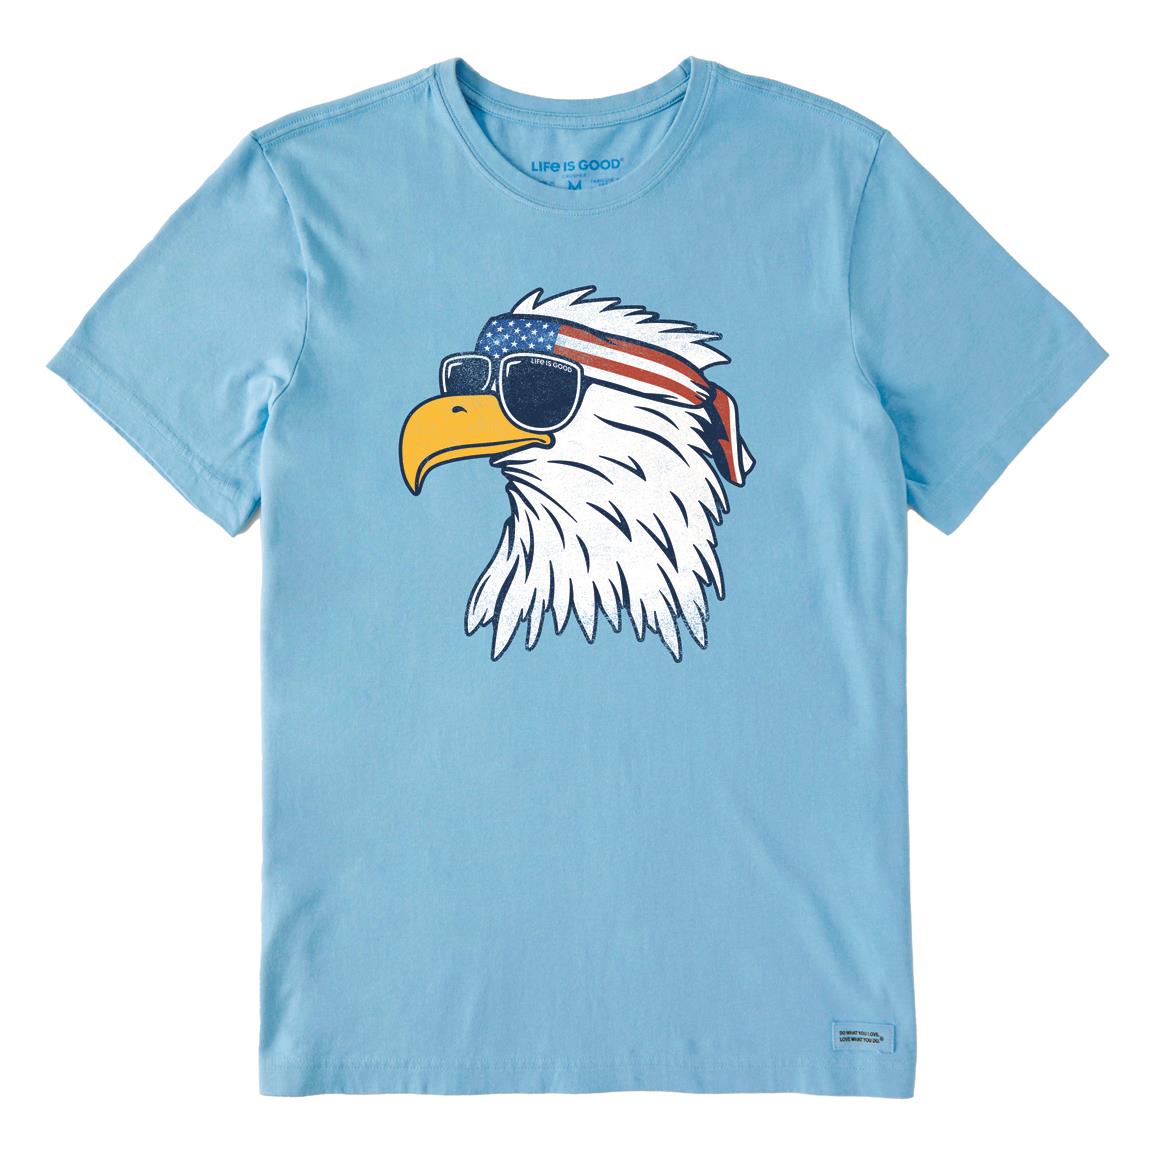 Life Is Good Men's Patriotic Eagle Crusher Shirt, Cool Blue